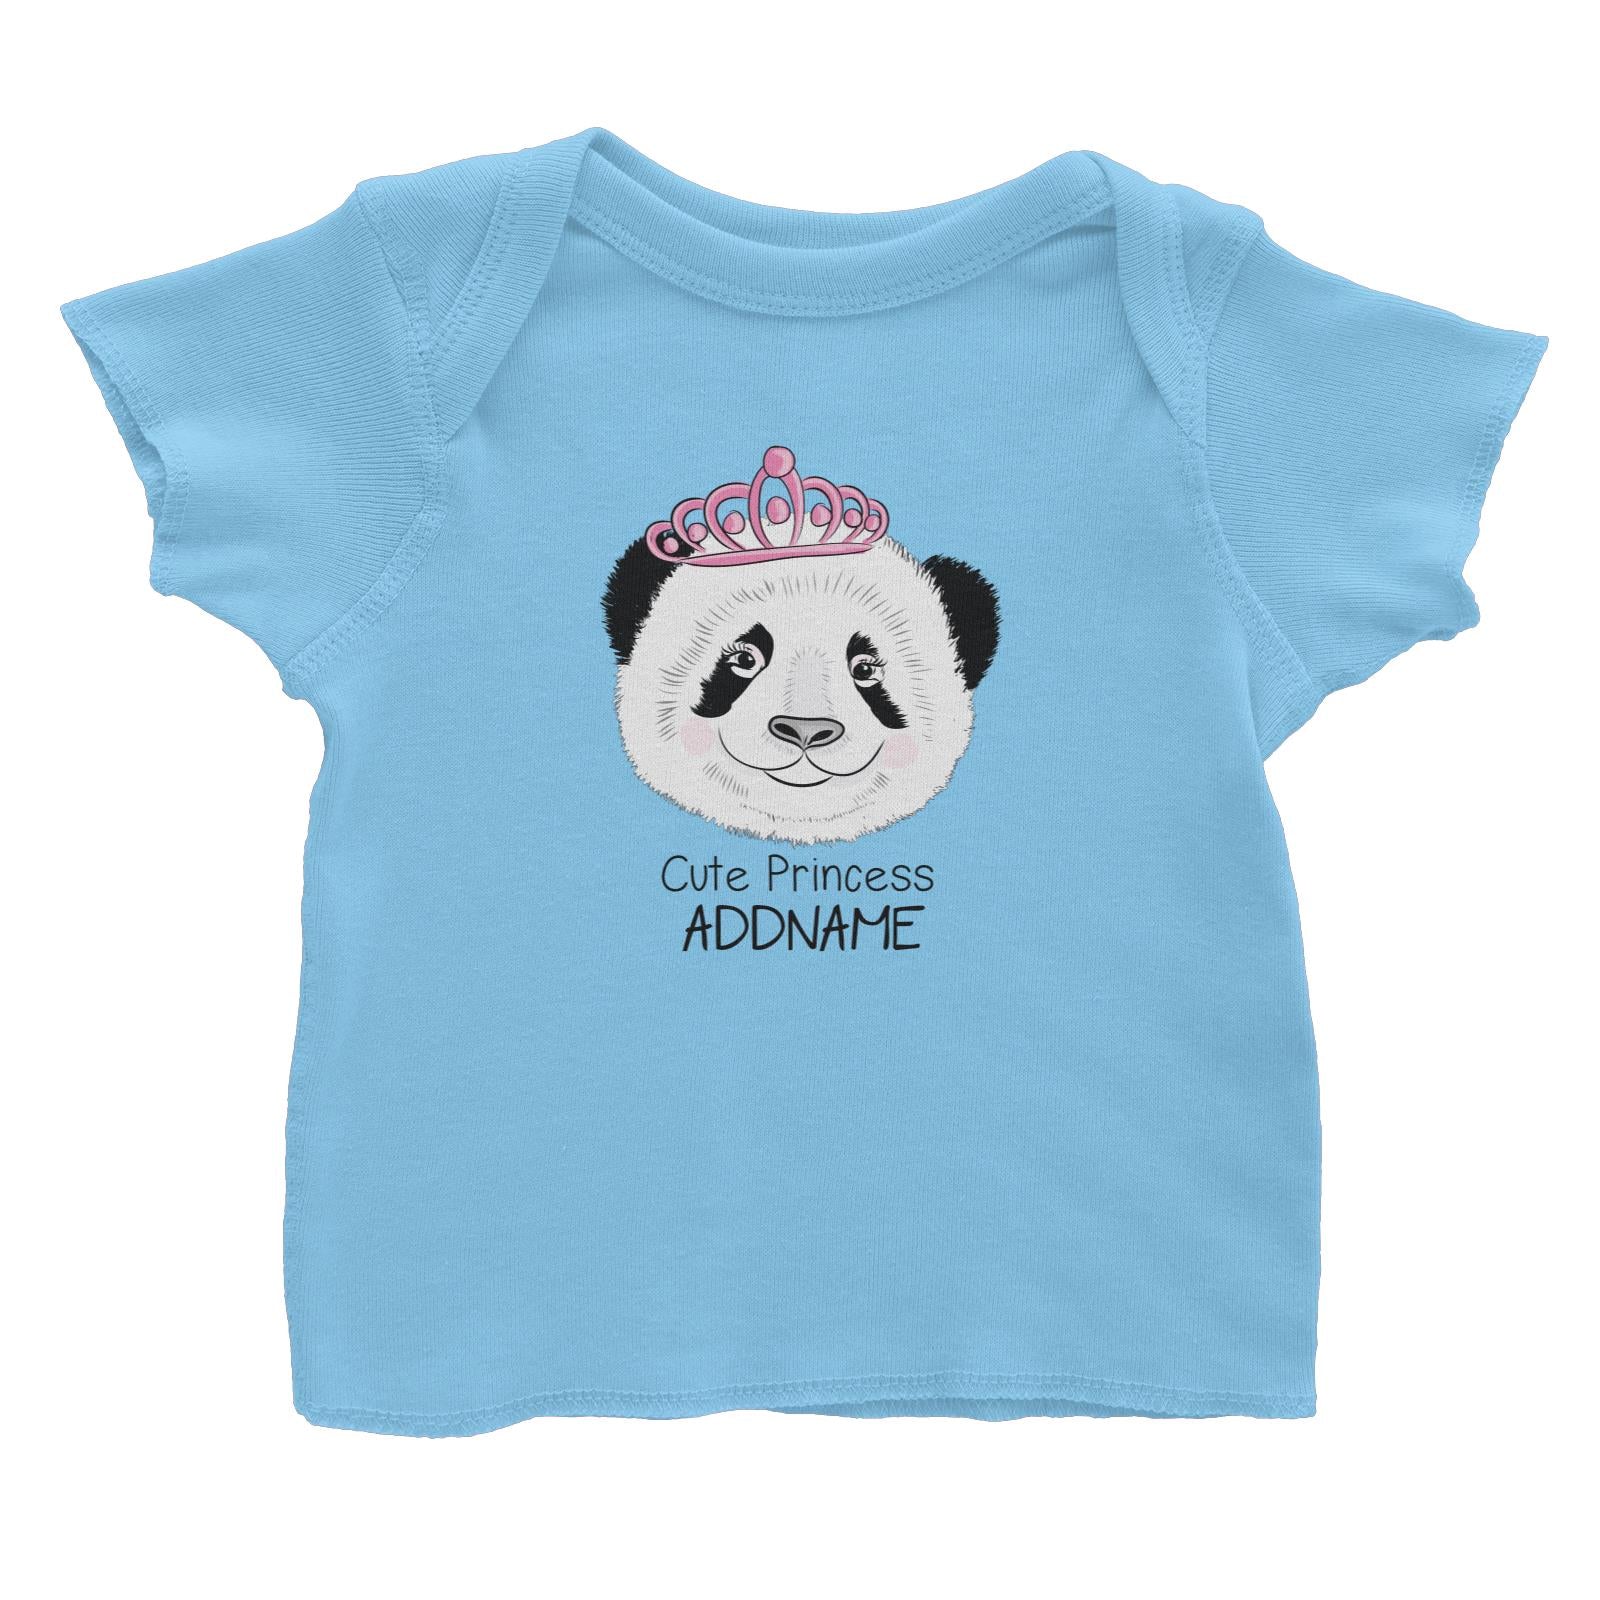 Cool Vibrant Series Cute Princess Panda Addname Baby T-Shirt